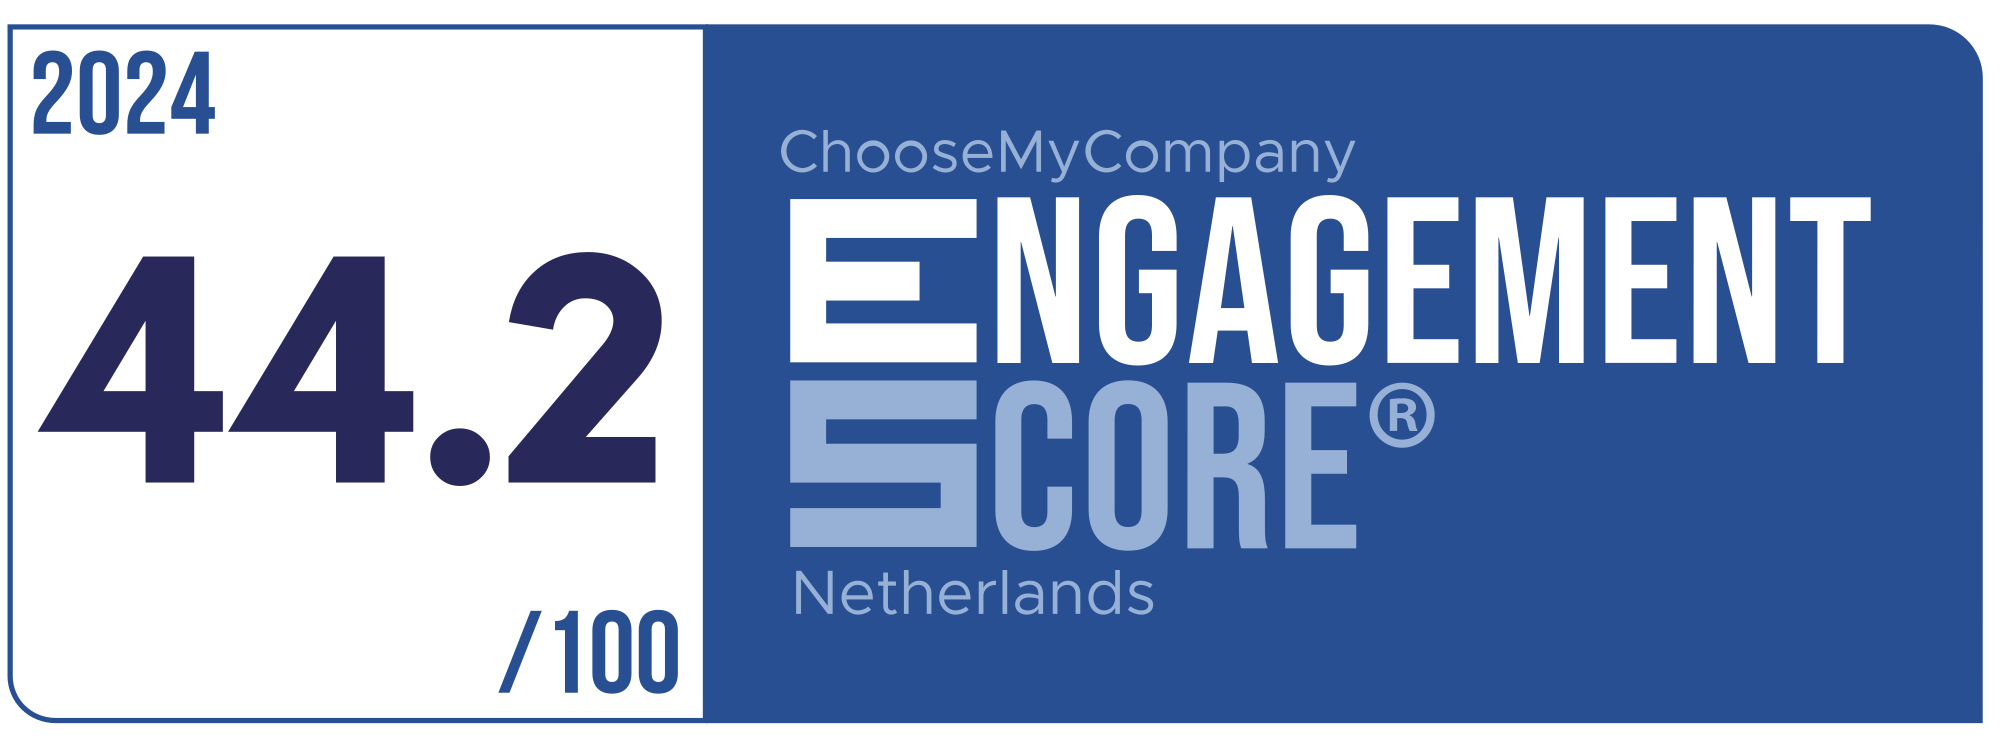 Label Engagement Score 2024 Netherlands